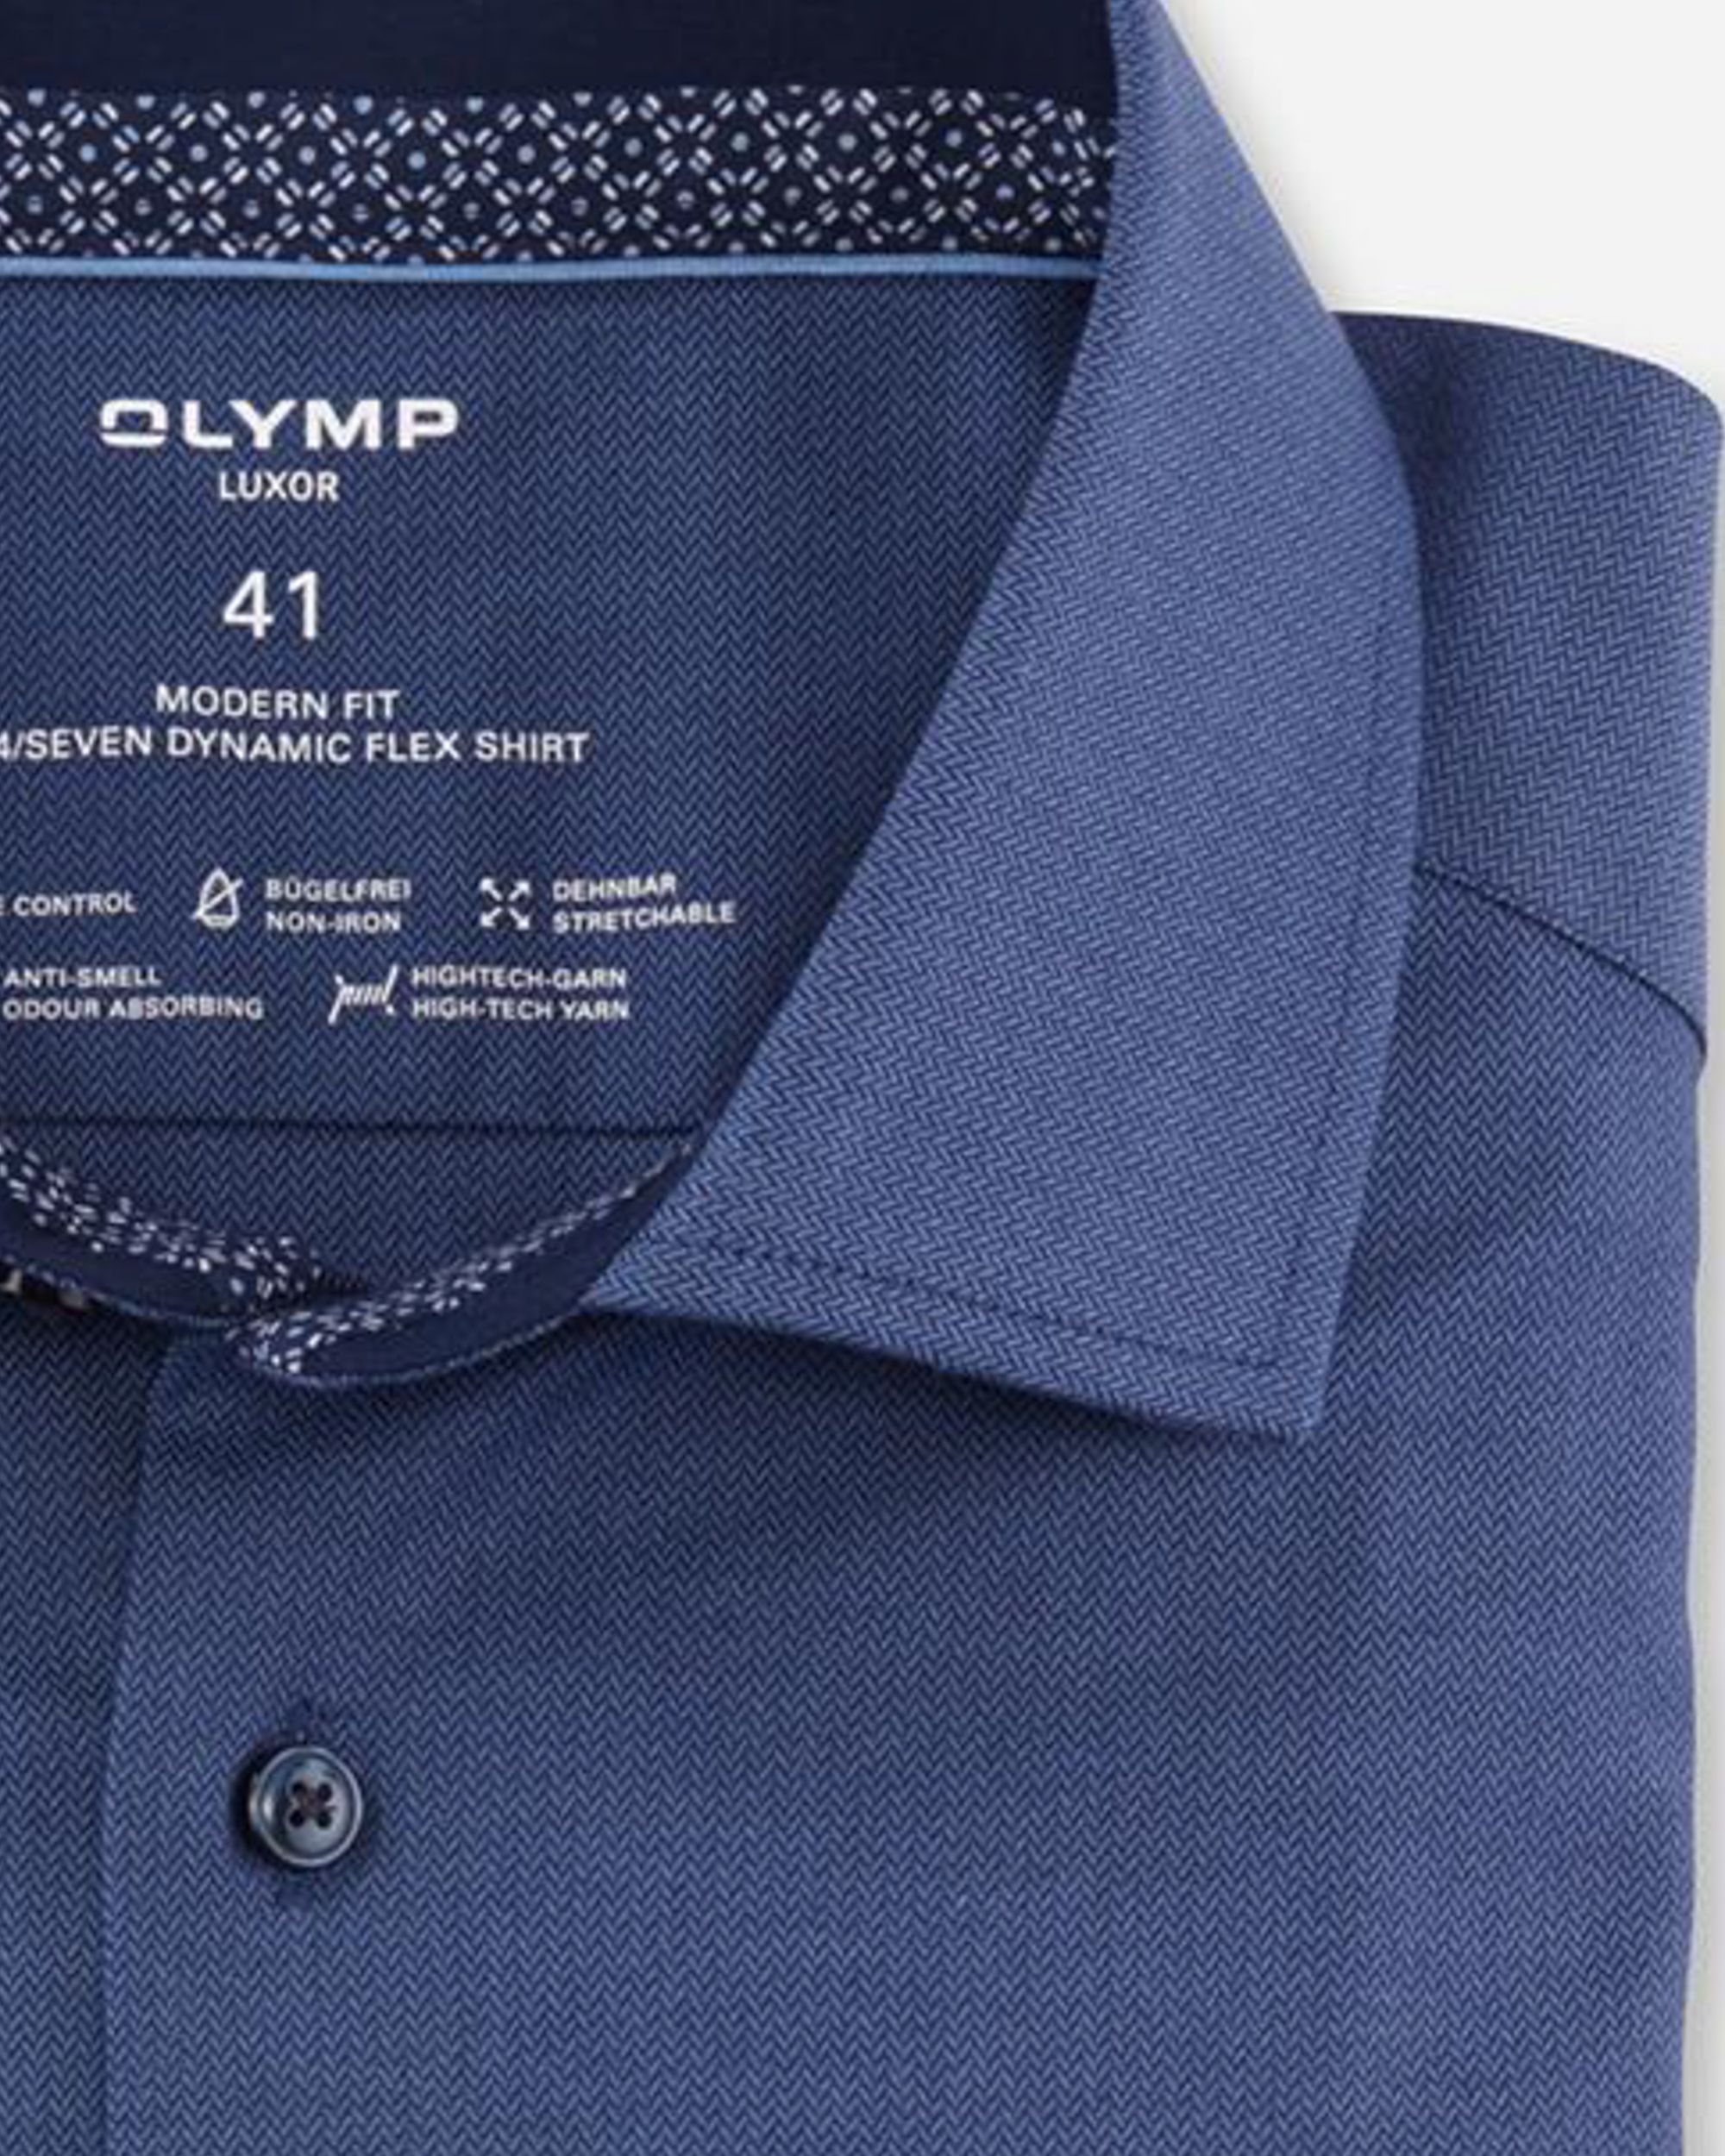 OLYMP Luxor 24/7 Modern fit Overhemd LM Donker blauw 086753-001-47